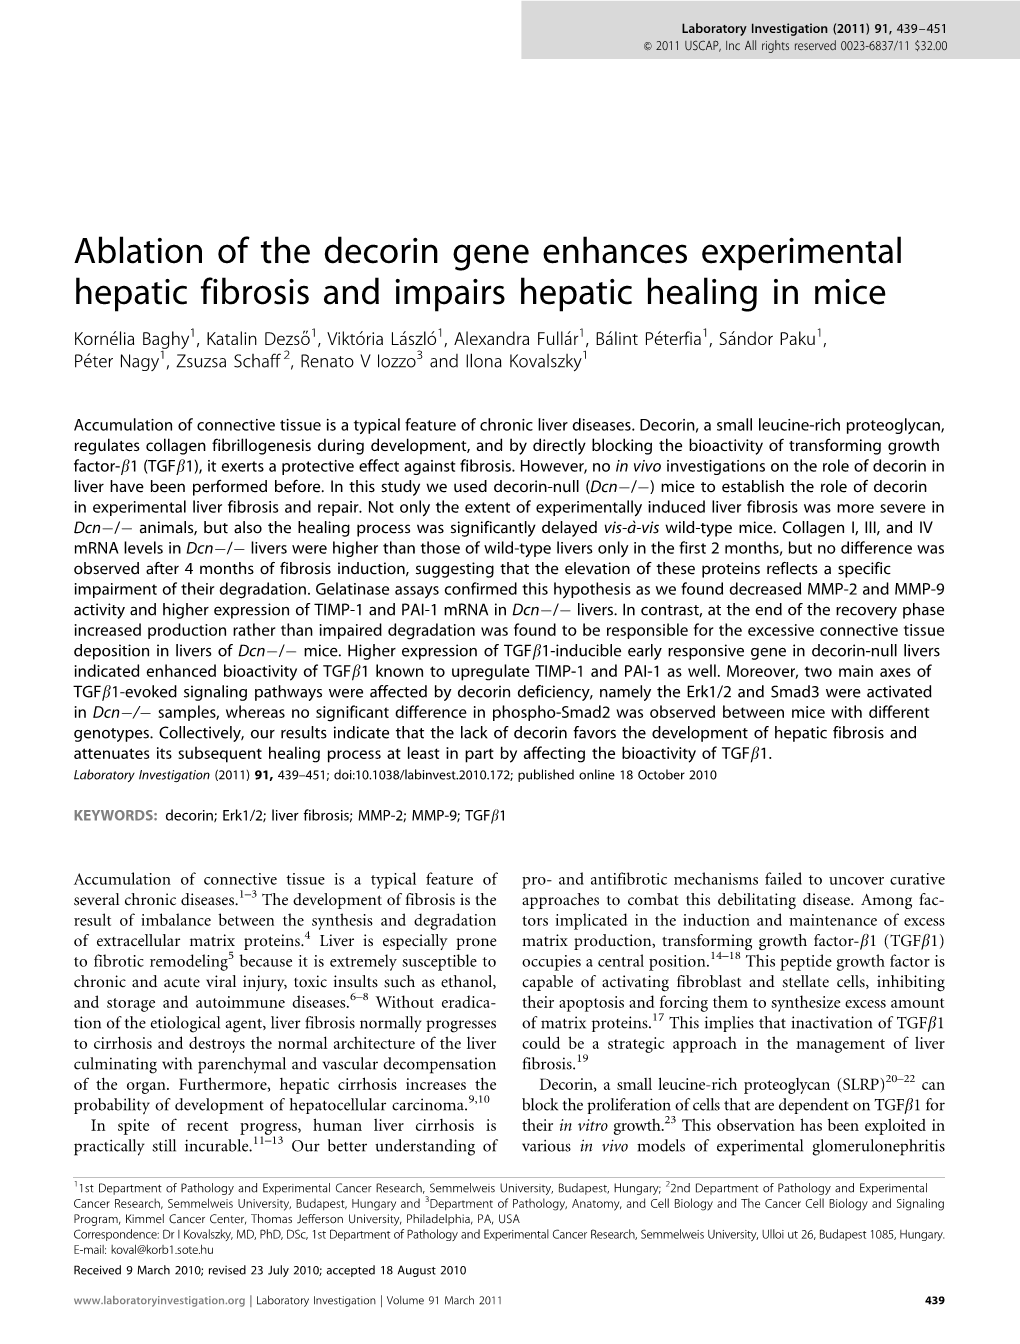 Ablation of the Decorin Gene Enhances Experimental Hepatic